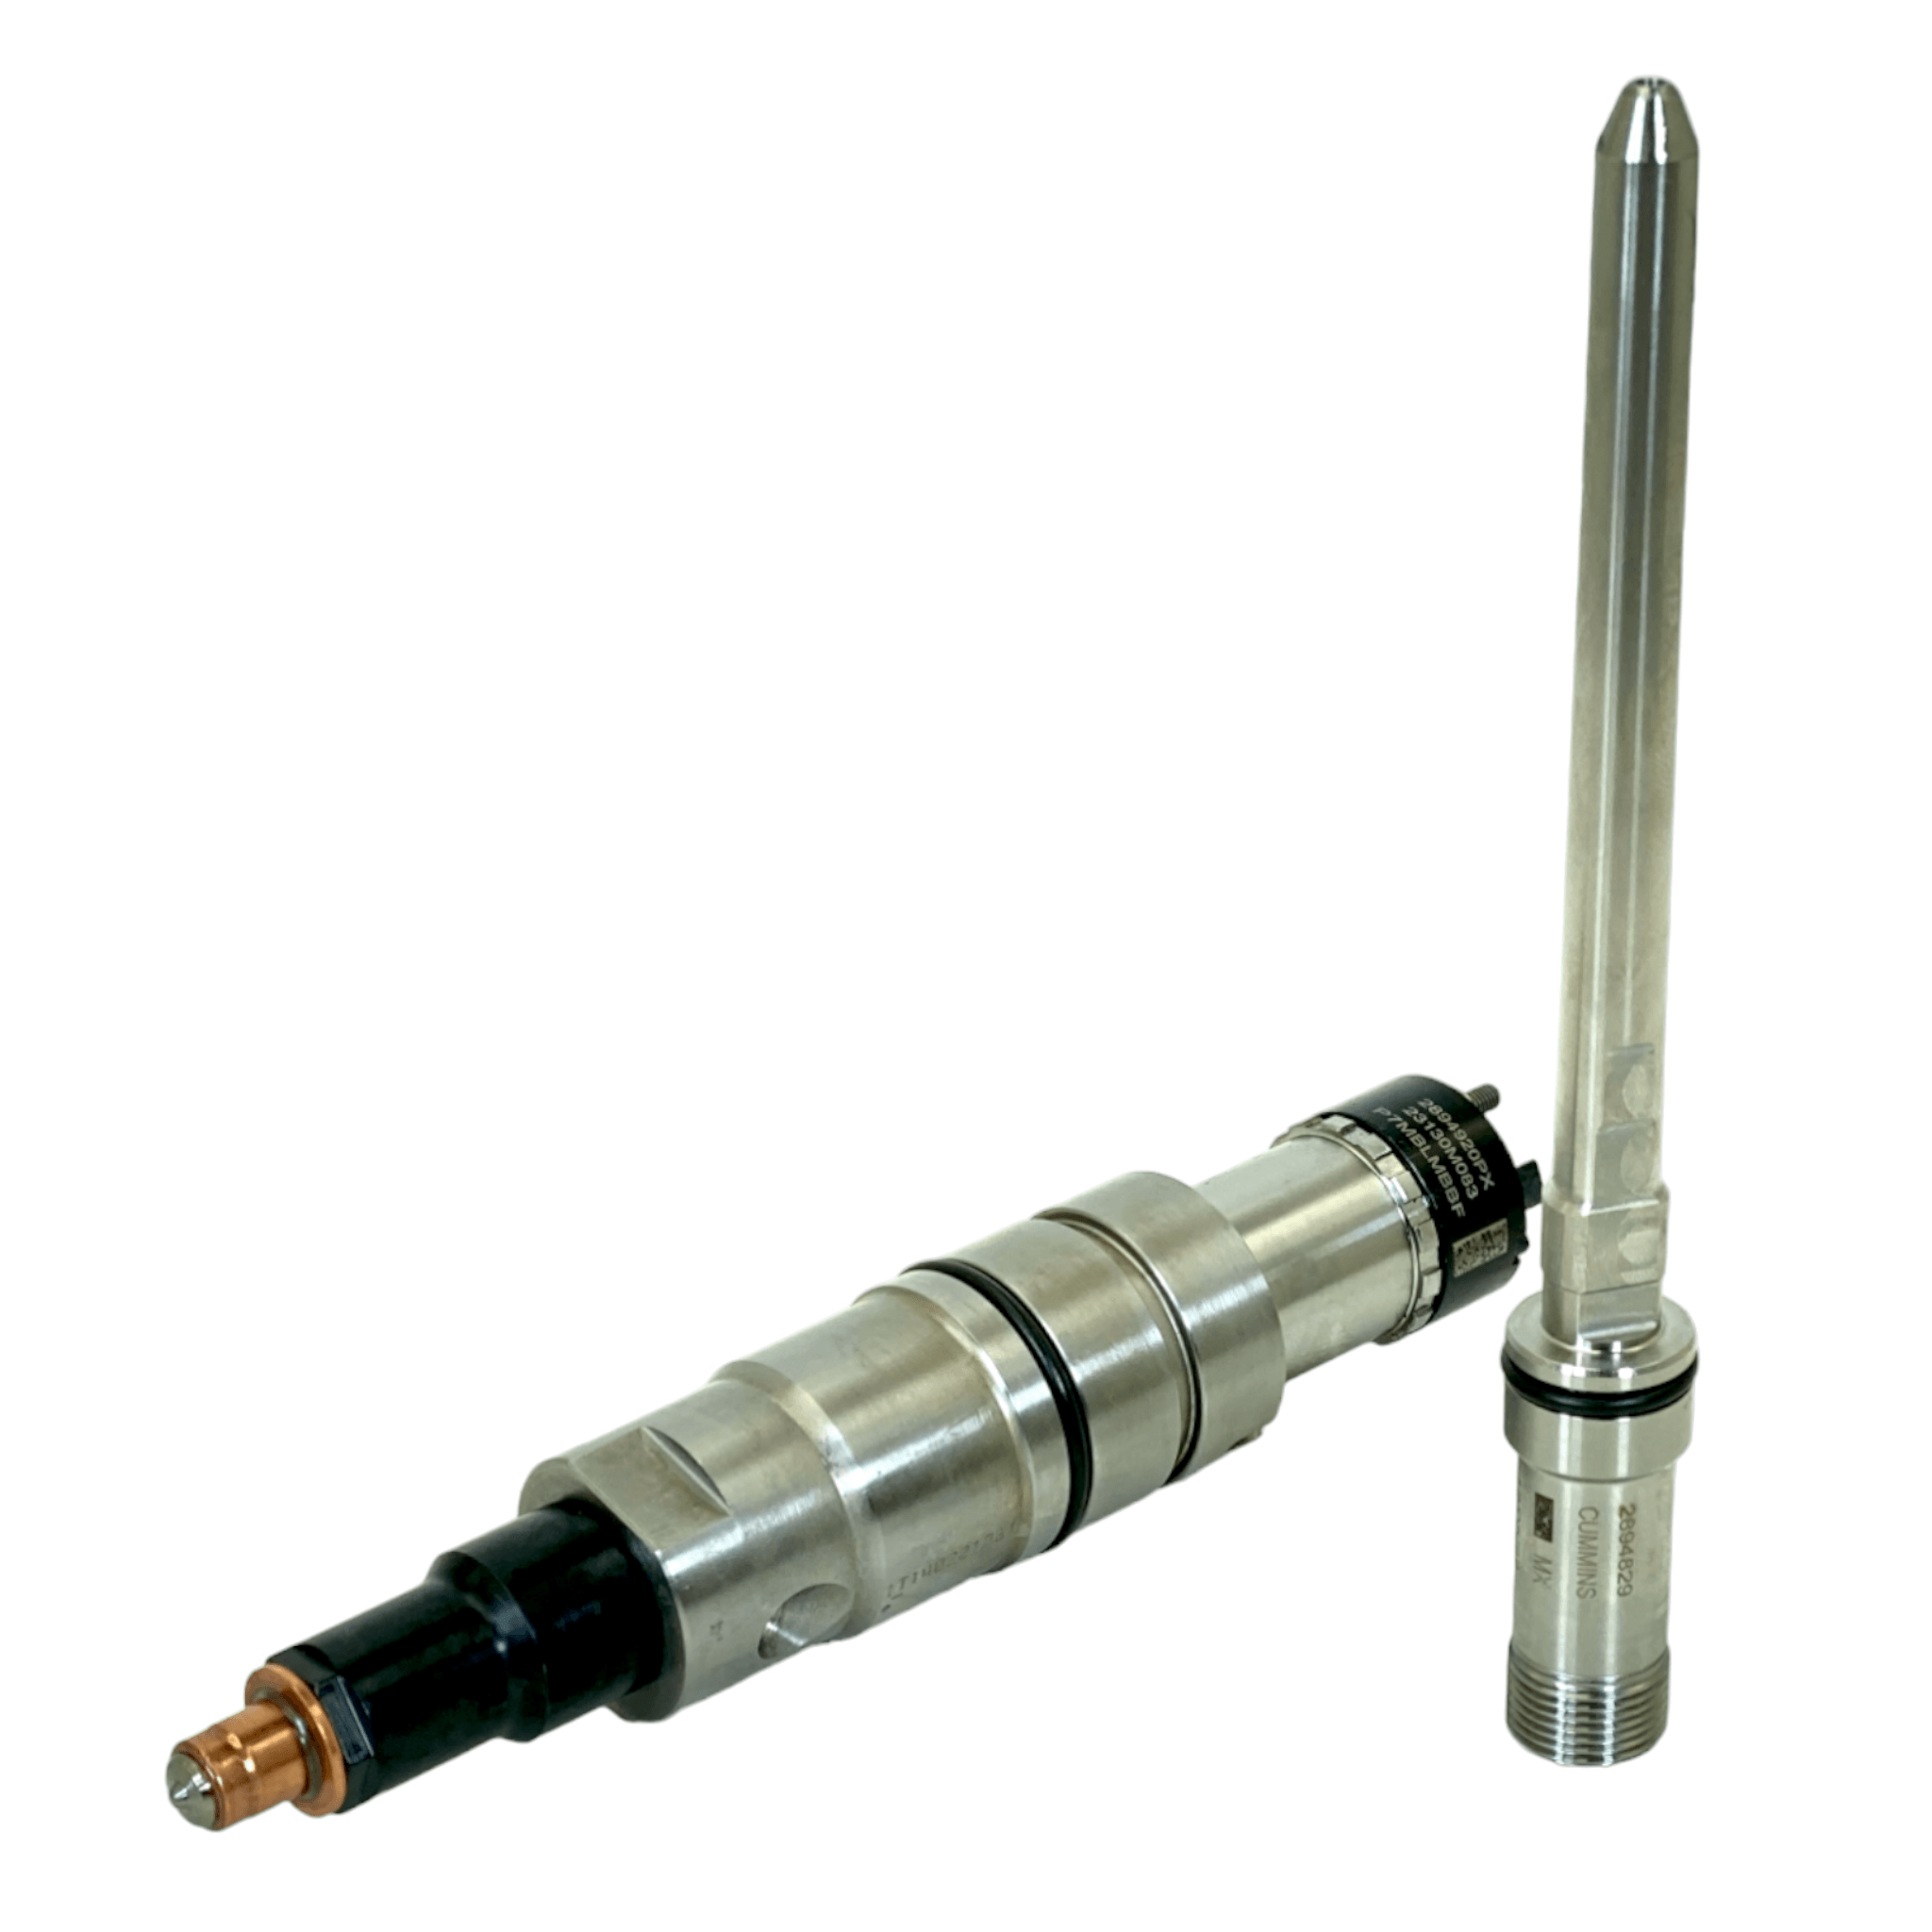 5579415Px Oem Cummins Fuel Injector For Xpi Fuel Systems On Epa10 Automotive 15L Isx/Qsx - ADVANCED TRUCK PARTS